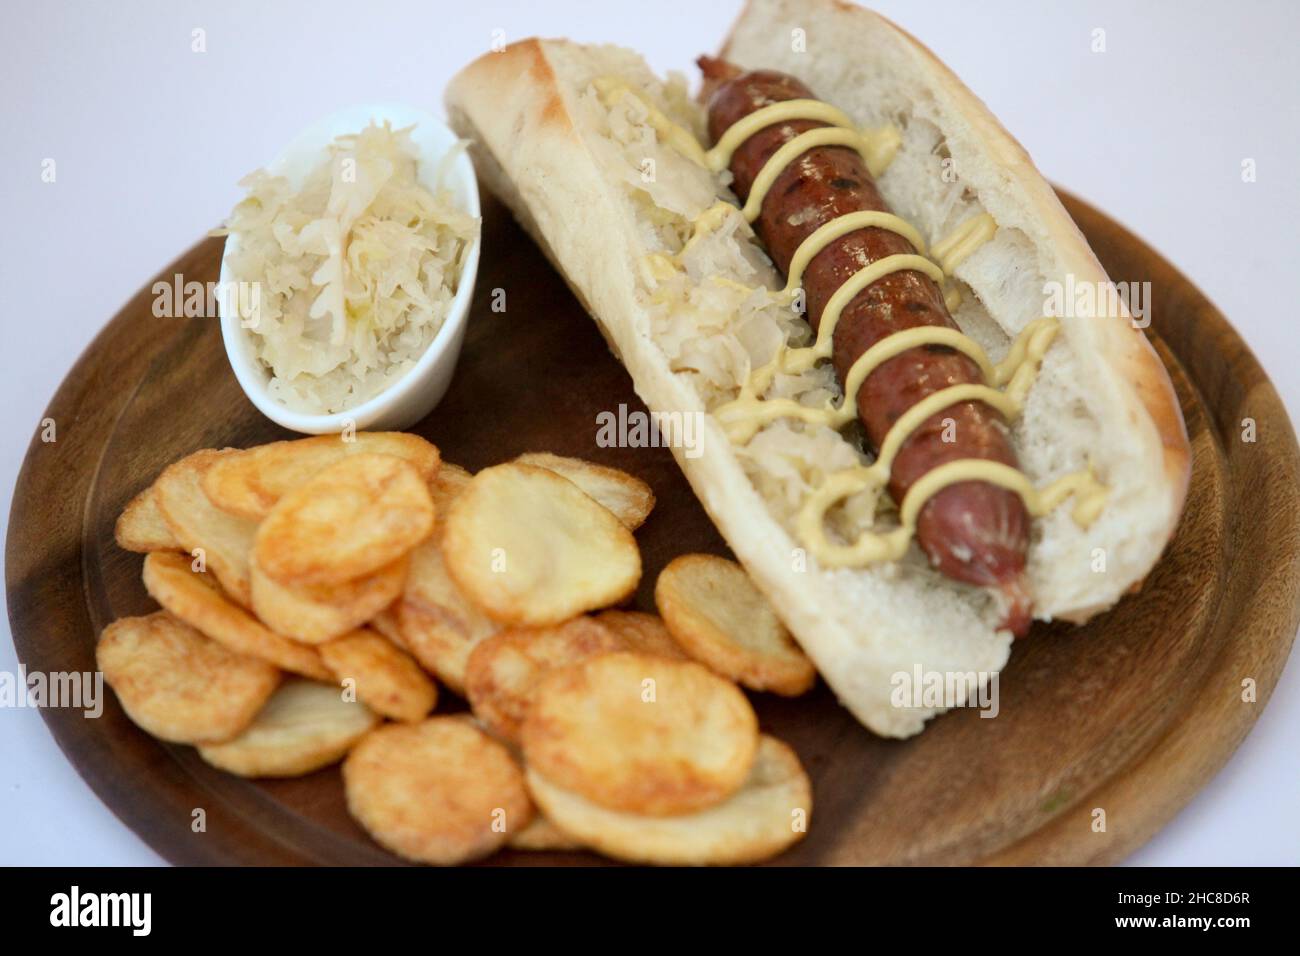 German Sausages (Bockwurst) hotdog with mustard roll and crisps Stock Photo